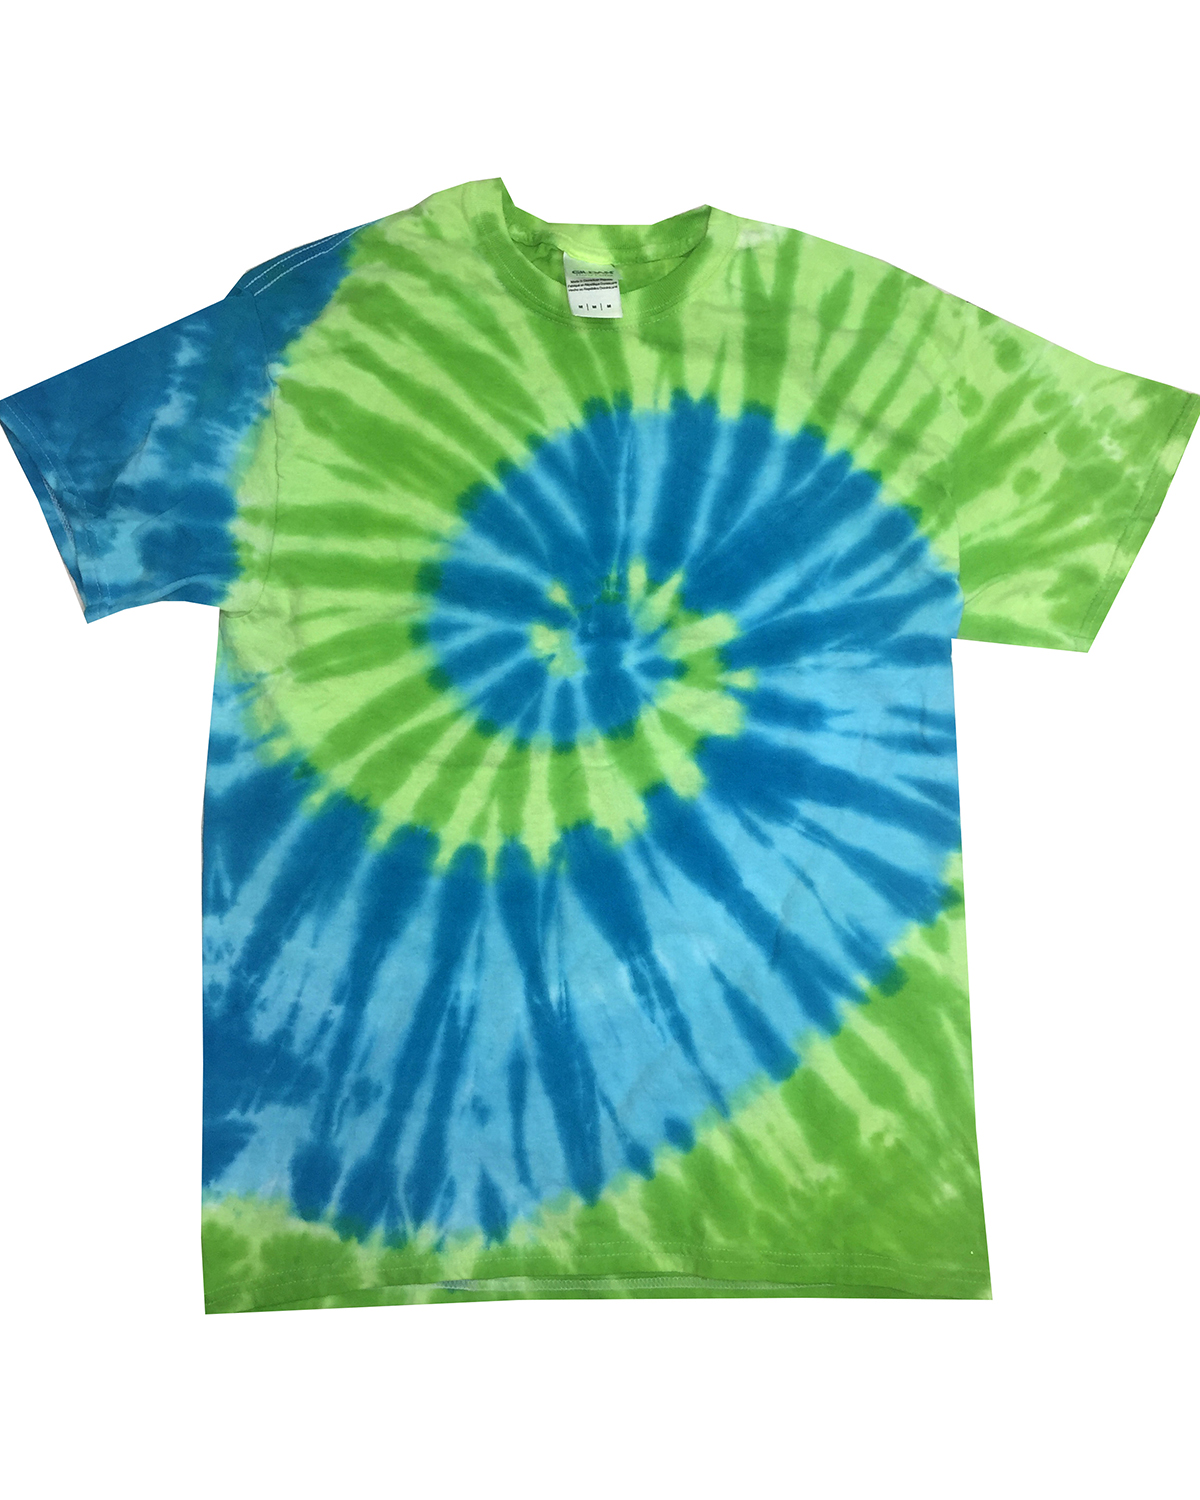 'Tie-Dye CD1180 Adult 5.4 oz., 100% Cotton Islands Tie-Dyed T-Shirt'